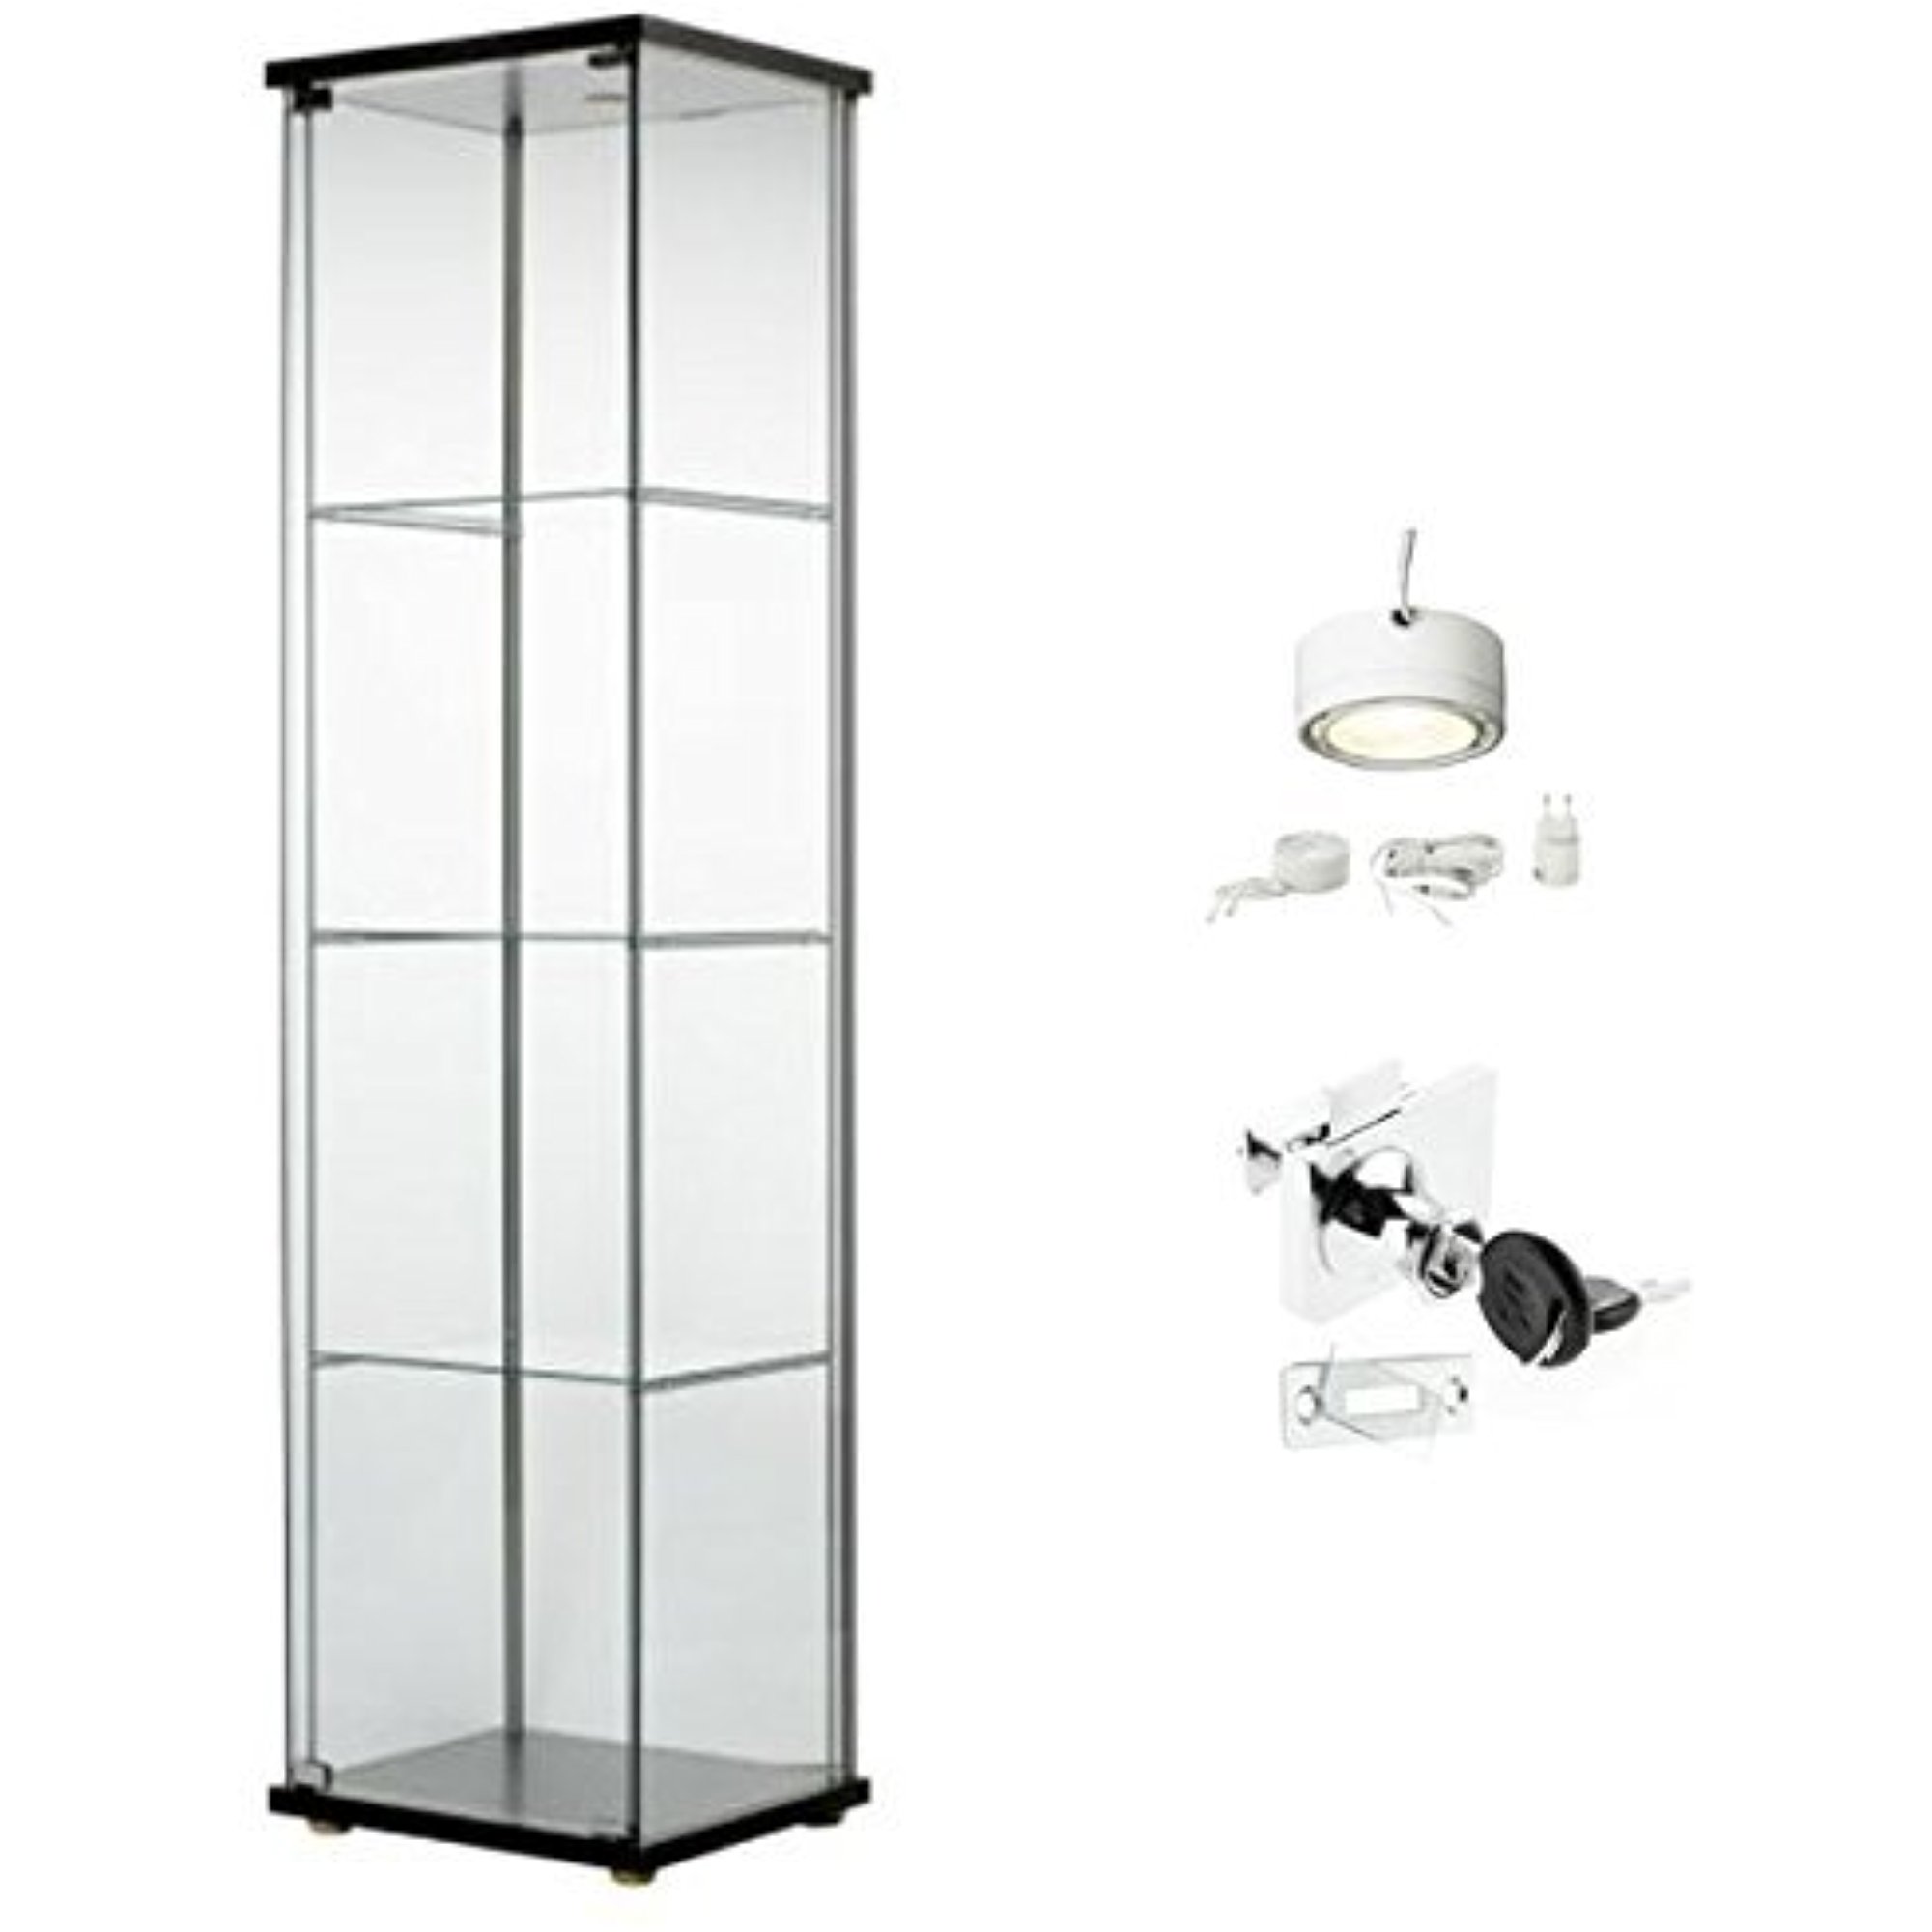 Detolf Glass Curio Display Cabinet